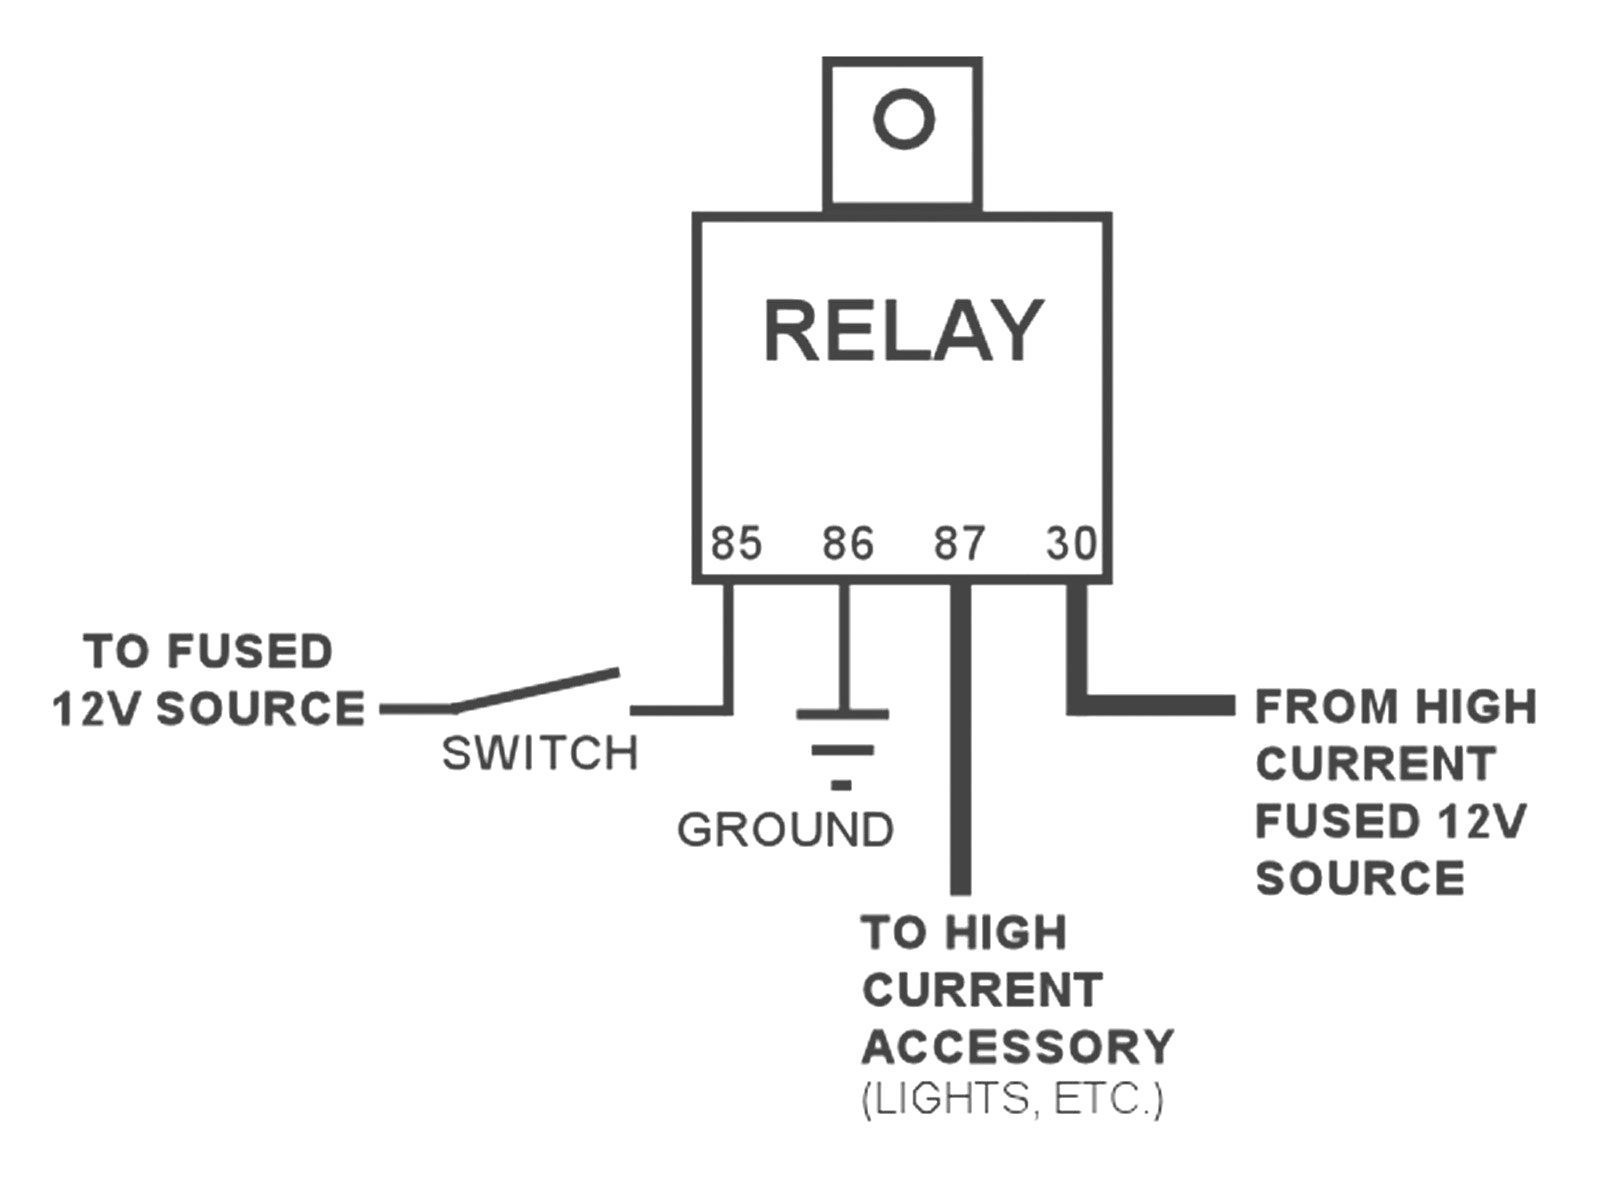 Accessory Relay Wiring Diagram Wiring Diagram Relay New Wiring Diagram for A Relay Switch Fresh